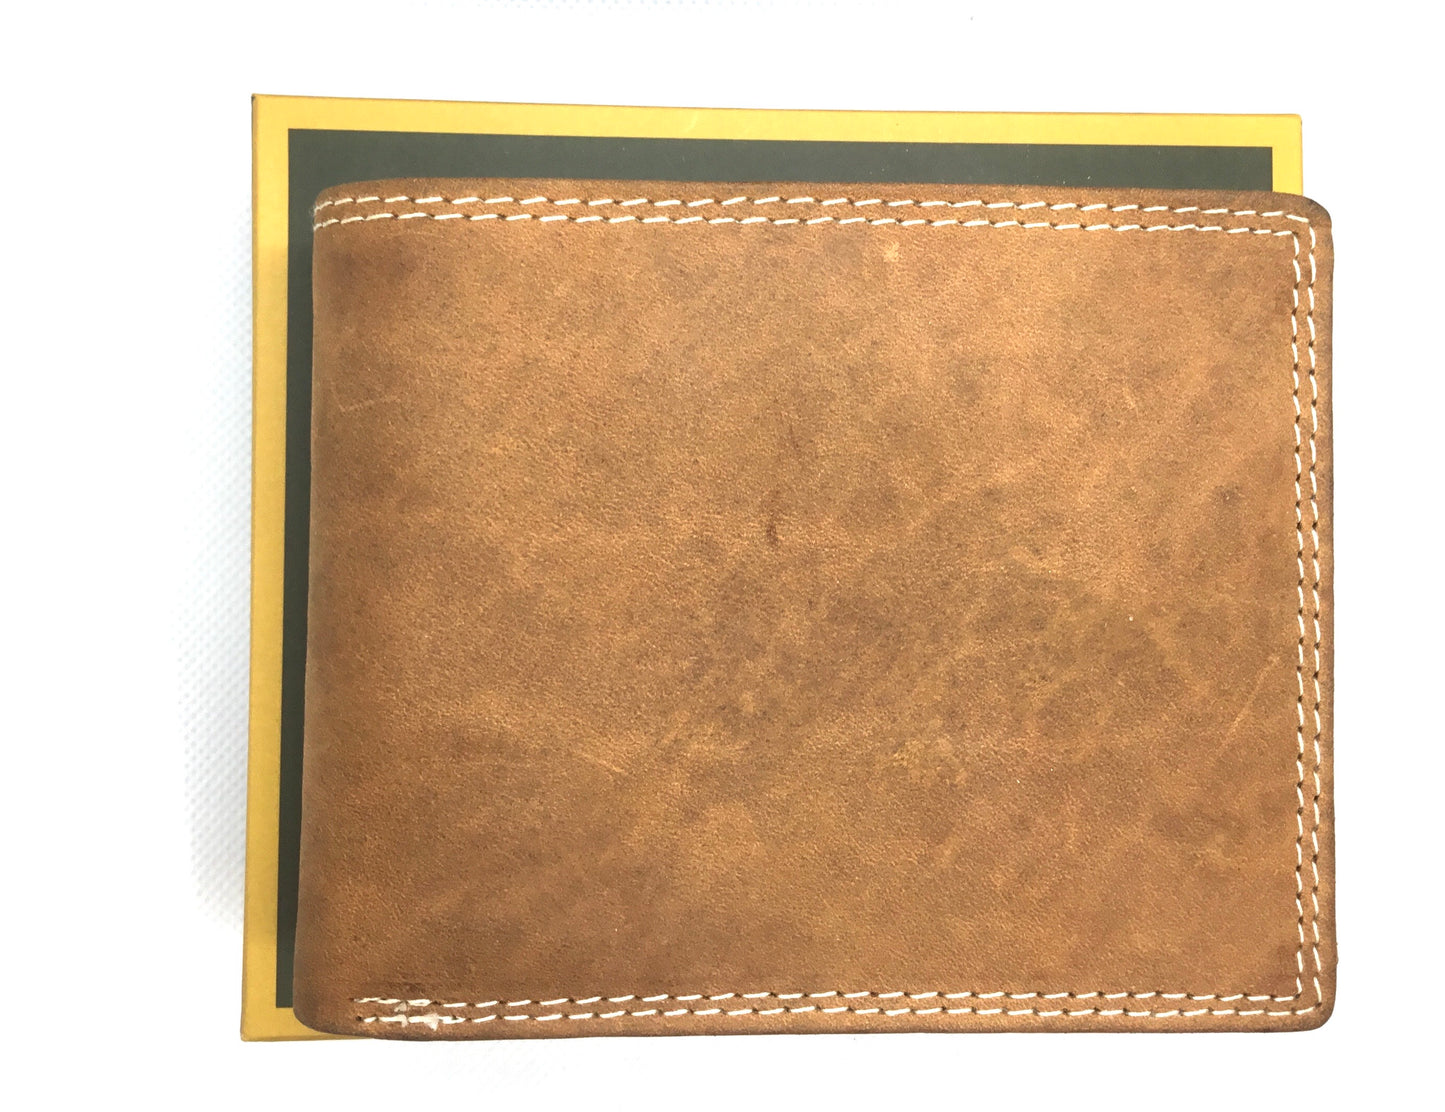 Cooper Allan Leather Wallet